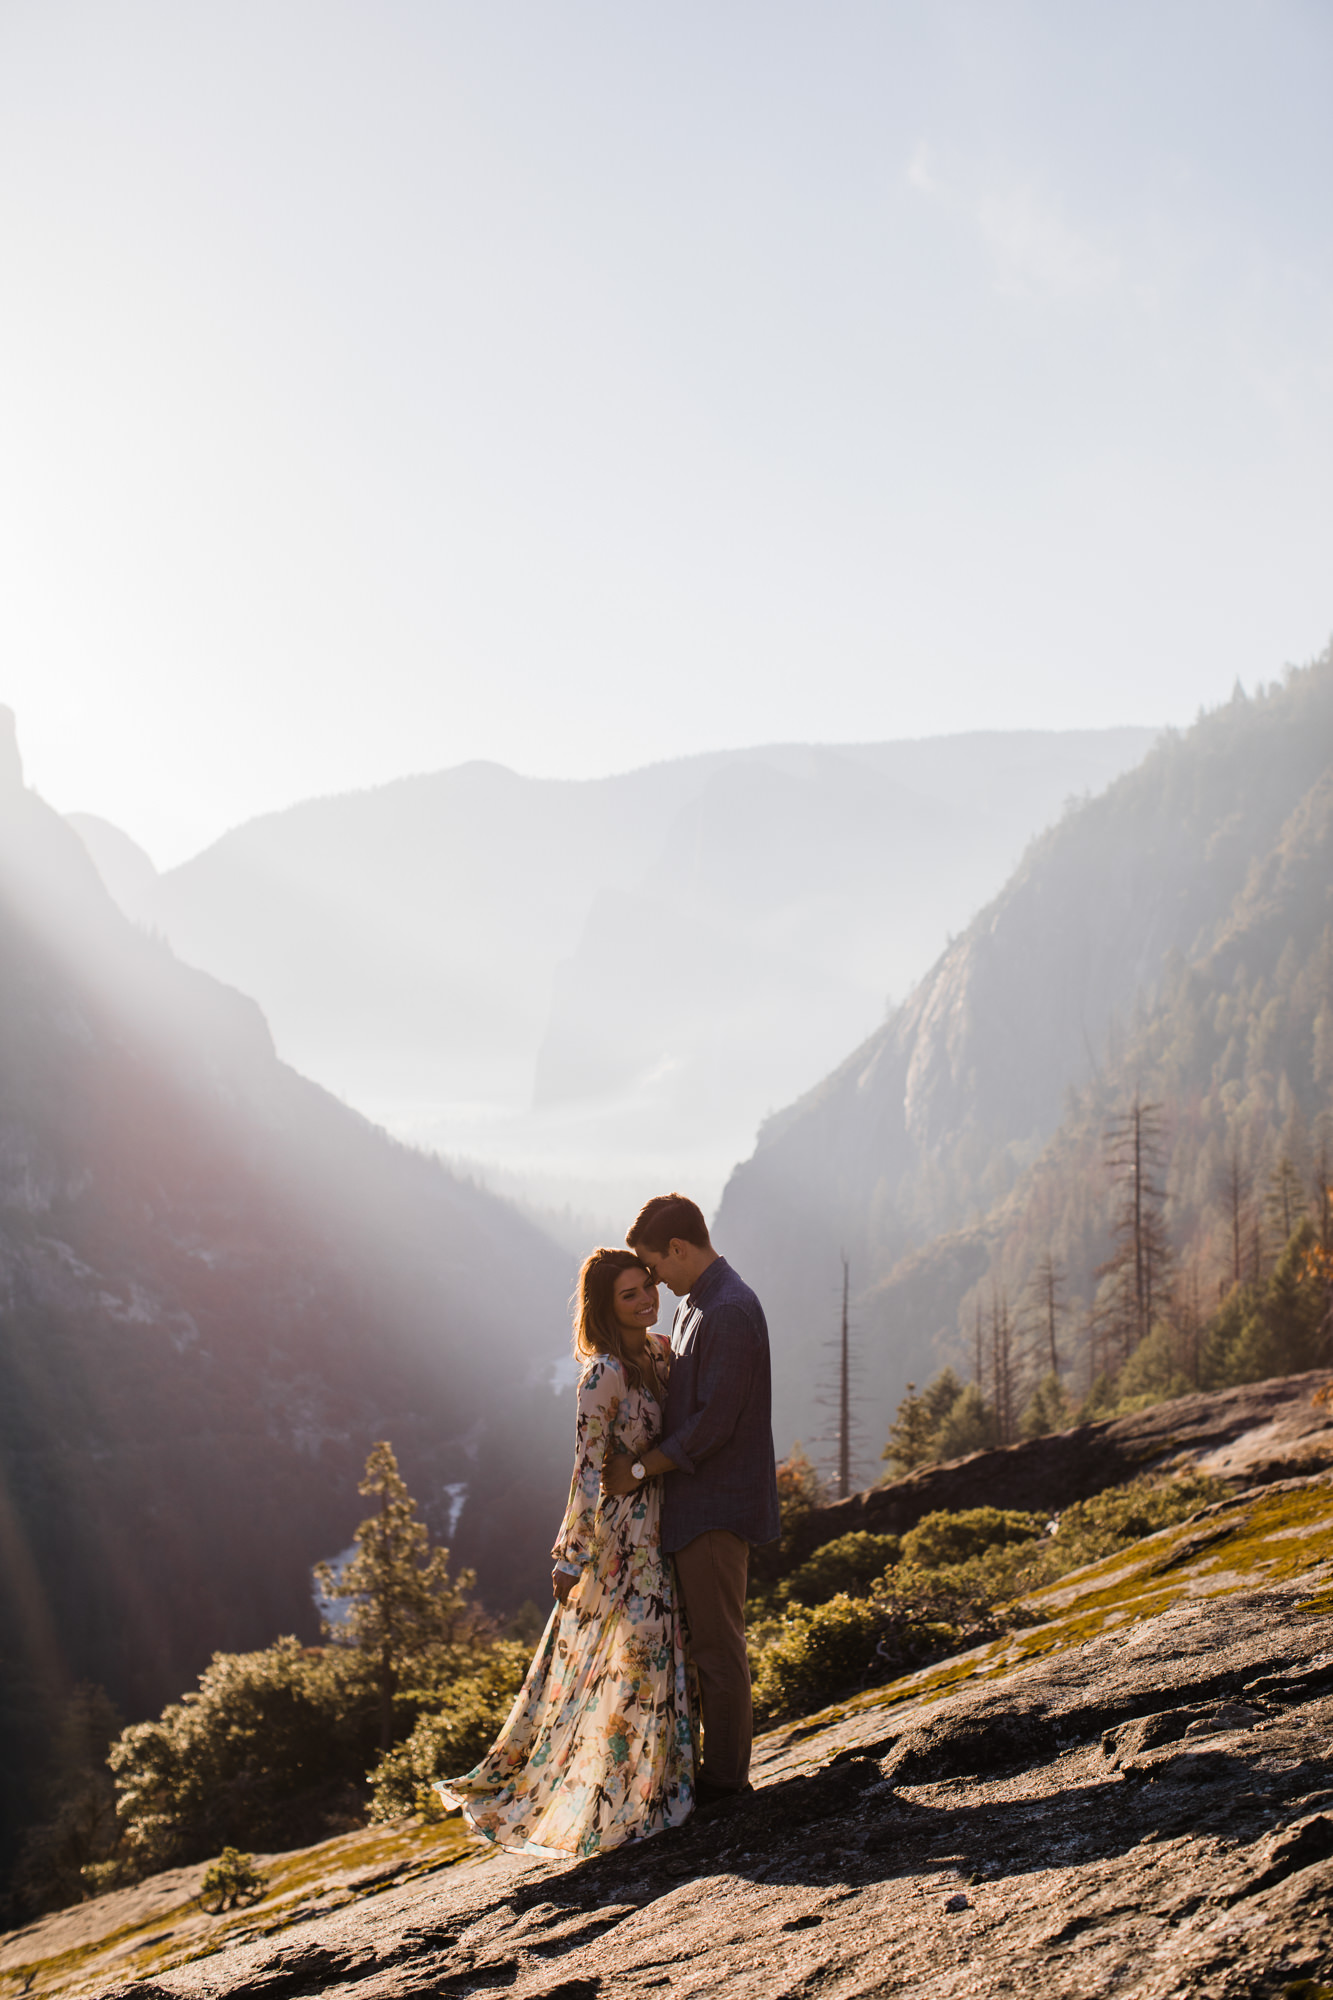 yosemite adventure session | national park wedding photographer | california elopement inspiration | www.thehearnes.com